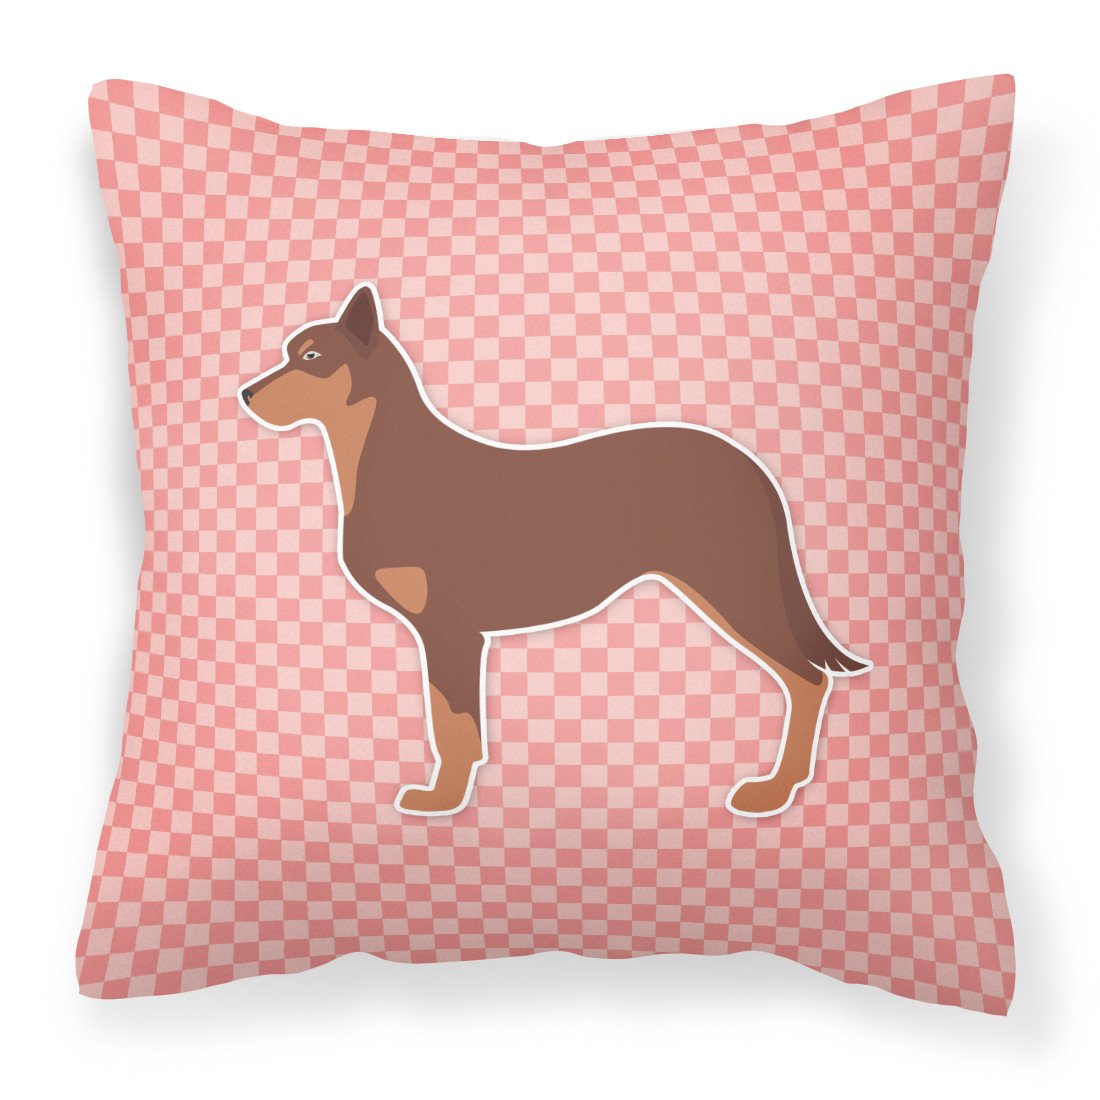 Australian Kelpie Dog Checkerboard Pink Fabric Decorative Pillow BB3629PW1818 by Caroline's Treasures